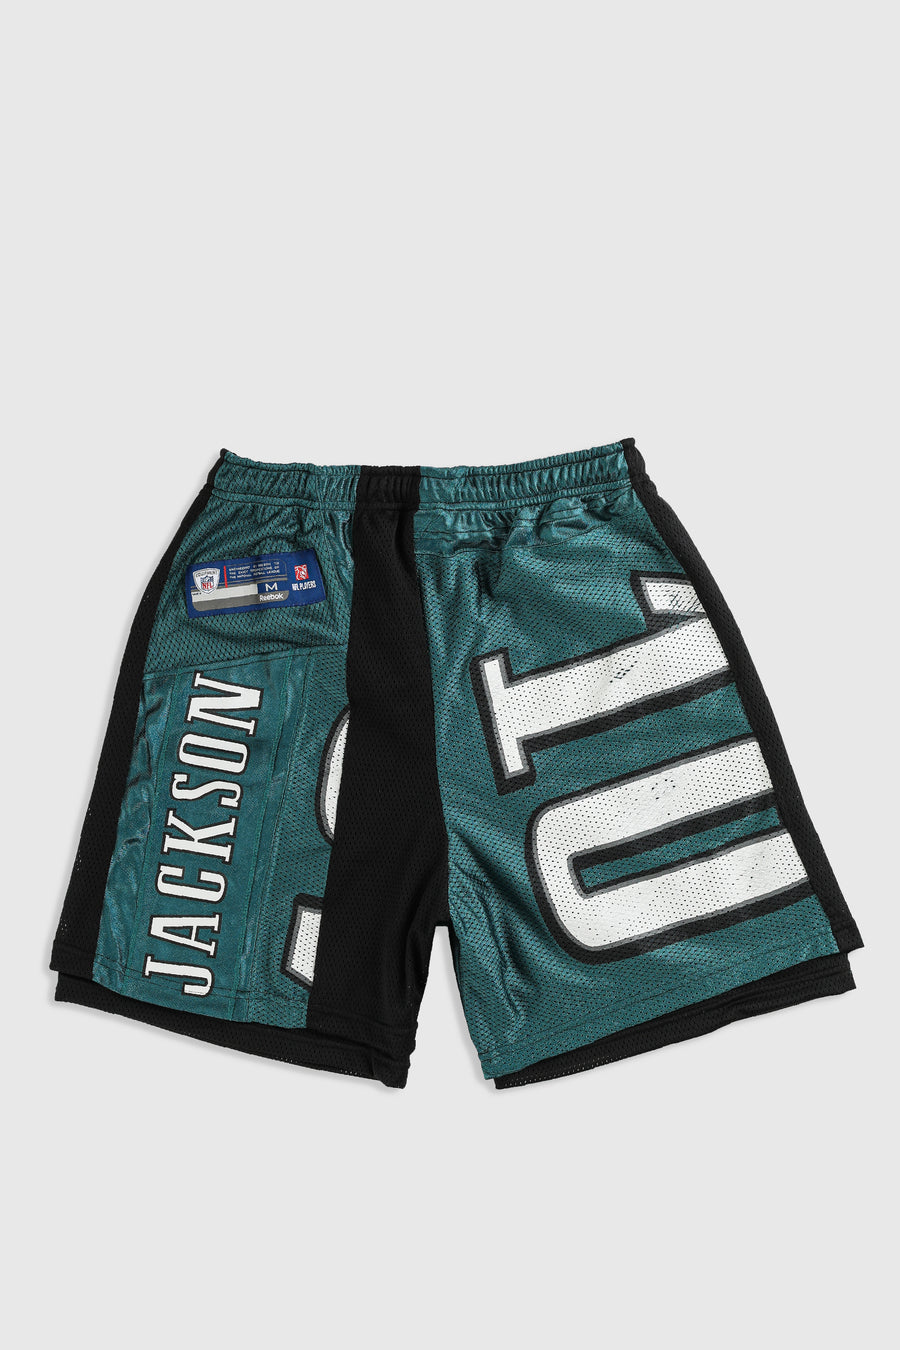 Unisex Rework Eagles NFL Jersey Shorts - L